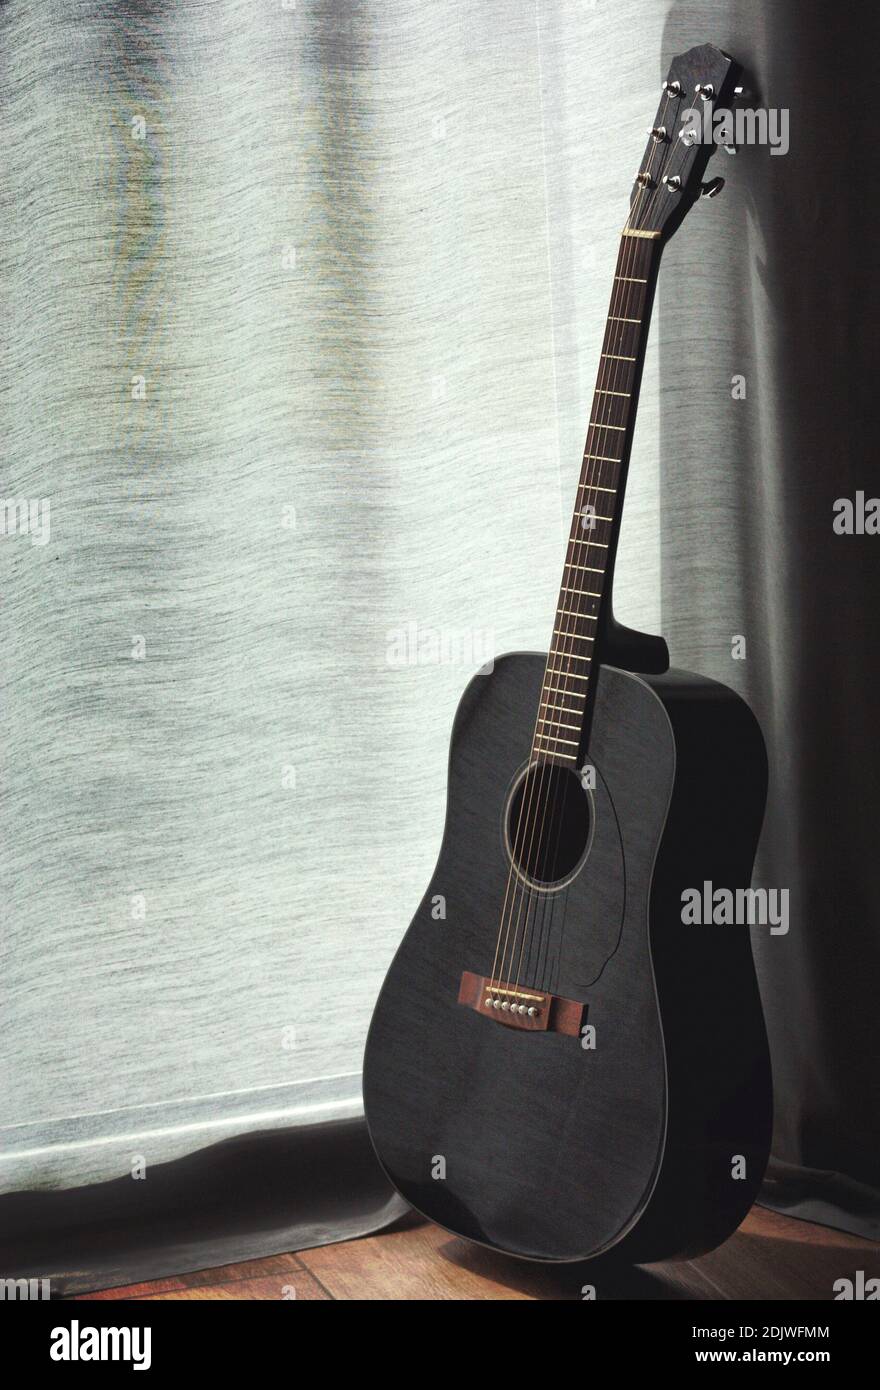 Guitare contre rideau de fenêtre Photo Stock - Alamy